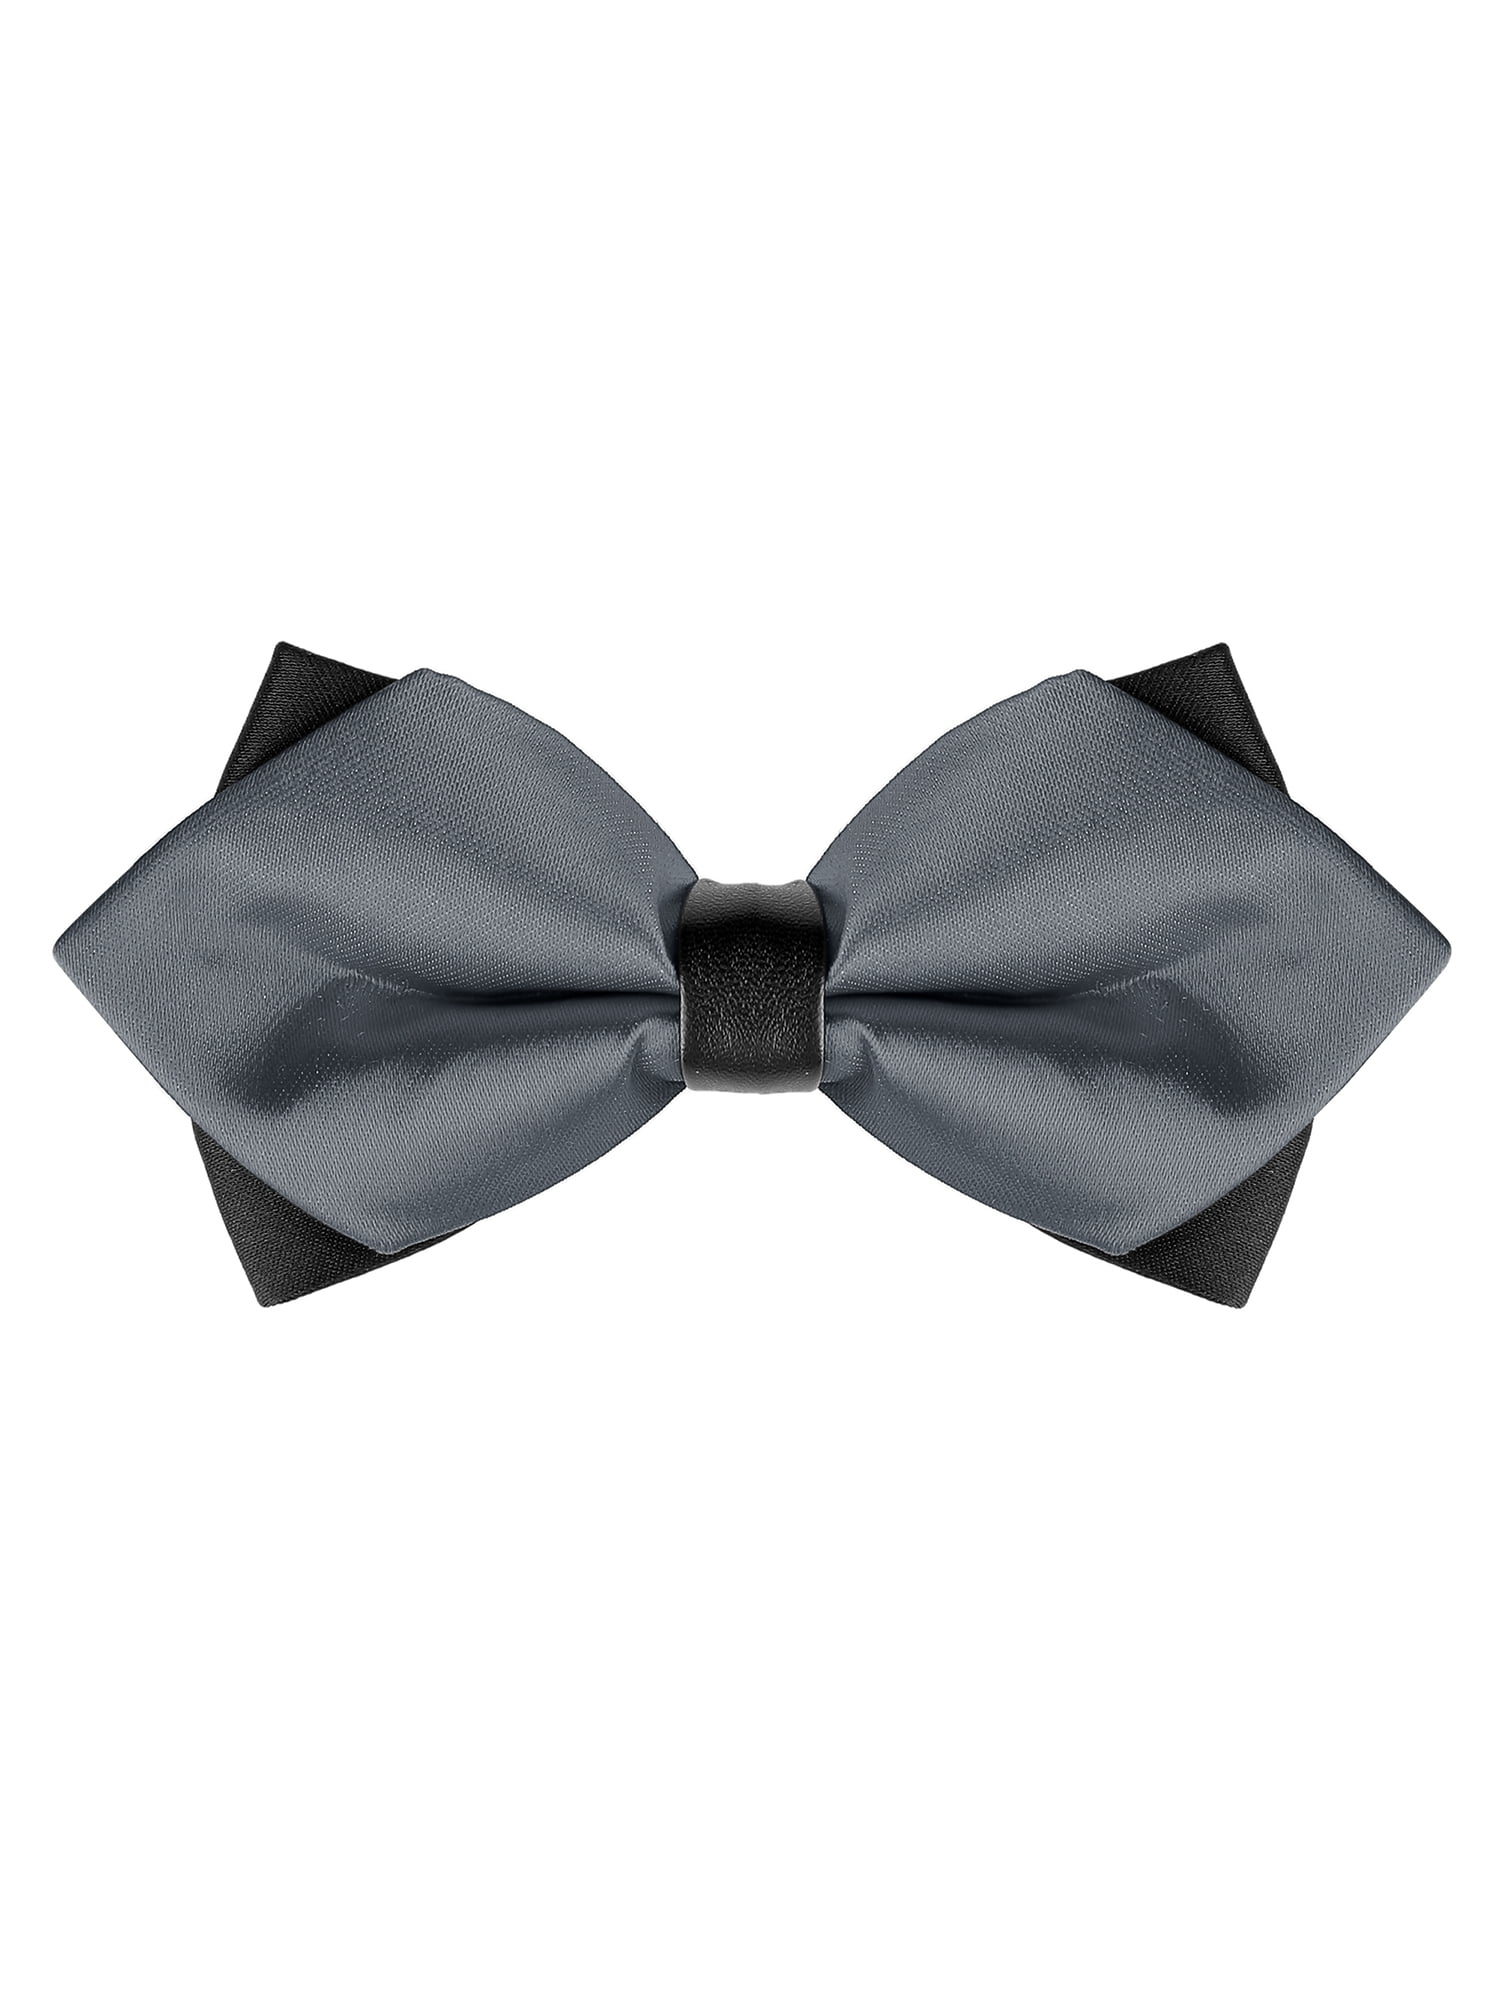 Various Grey Shades Striped Black Textured Bow Tie Pre-tied Adjustable Wedding 